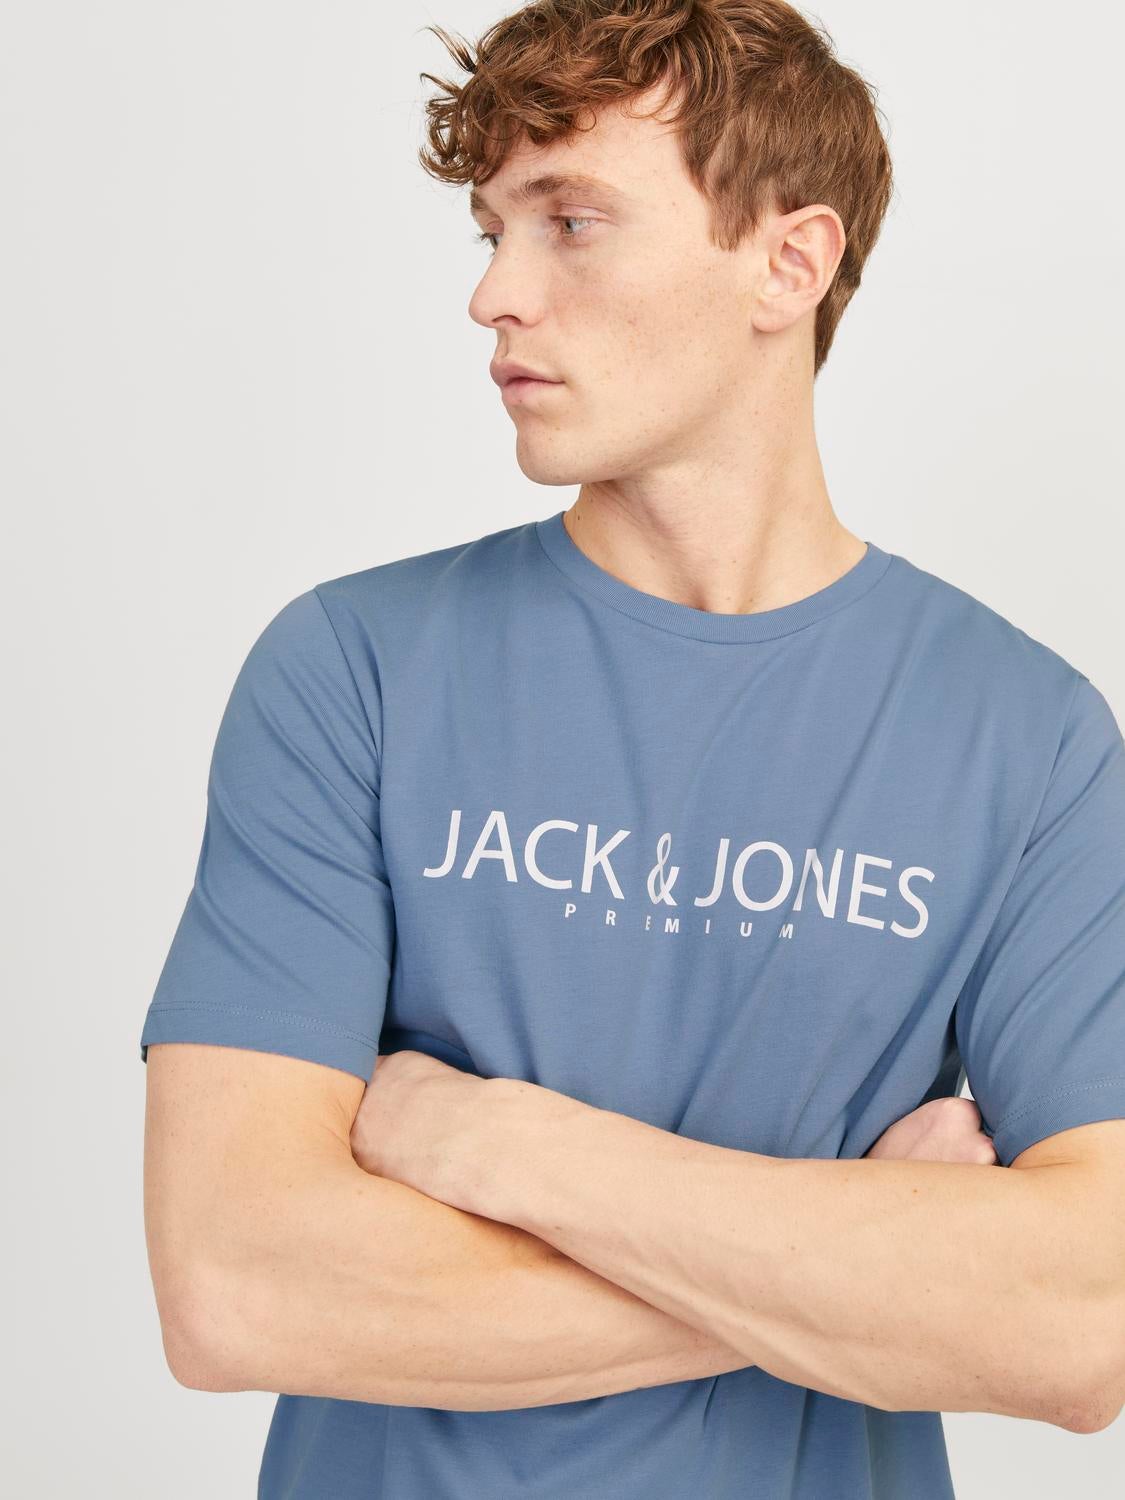 JACK & JONES - Brand Guide | MandM